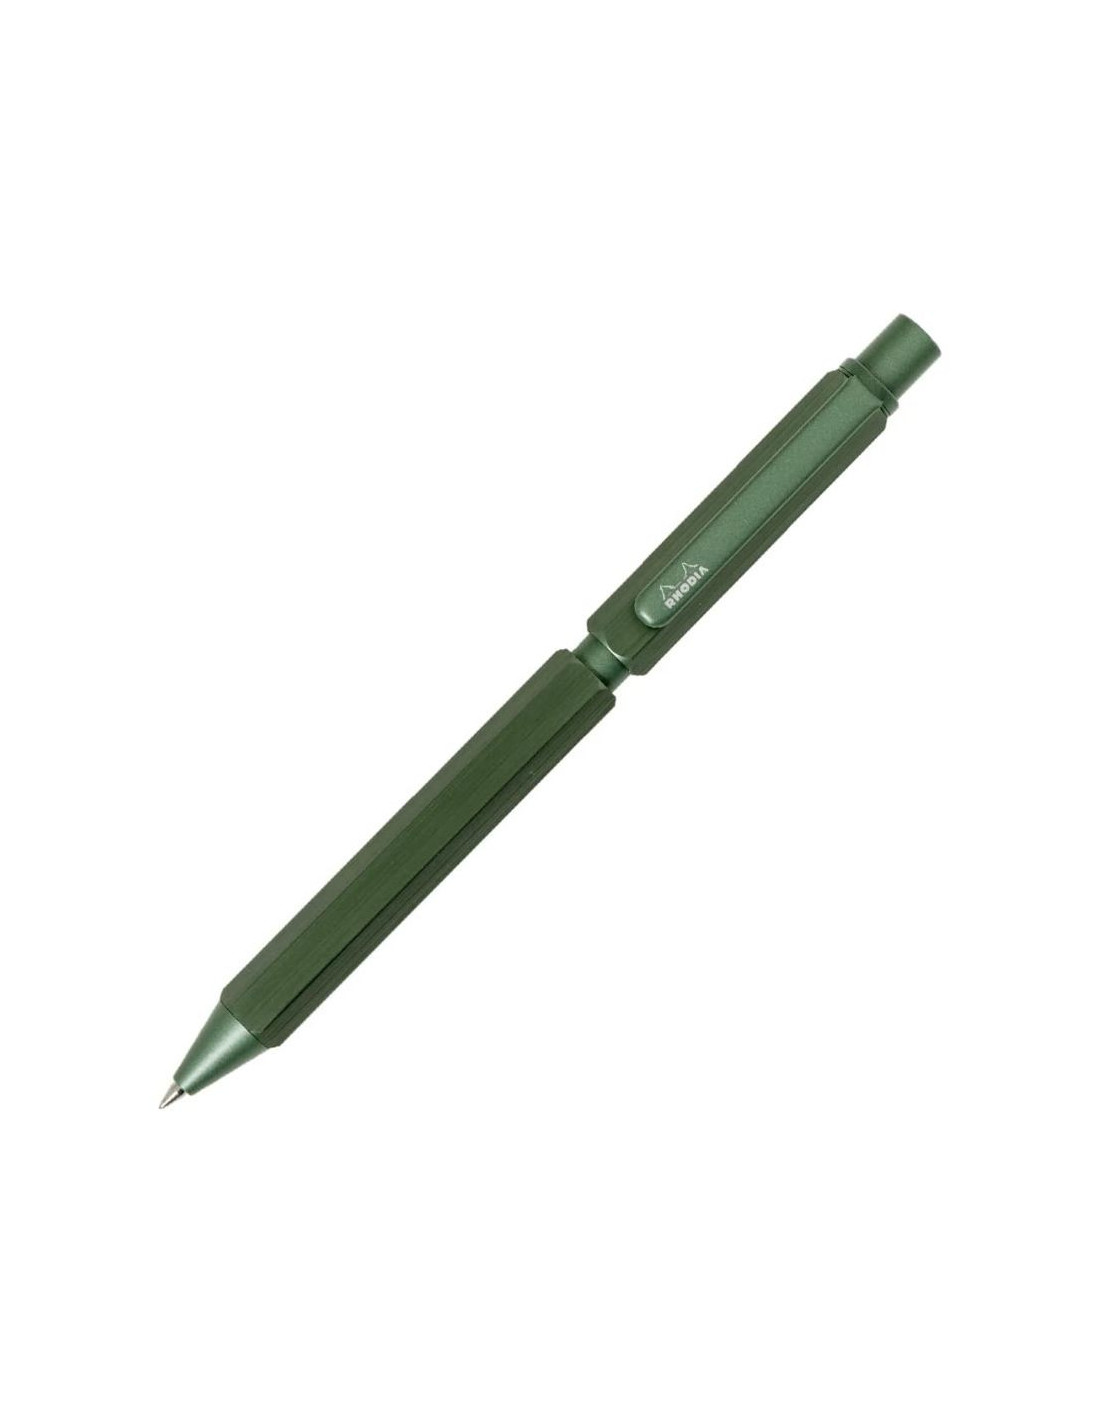 Rhodia scRipt Multipen 3in1 - 2 colors ballpoint pen and 0.5mm mechanical pencil - Sage